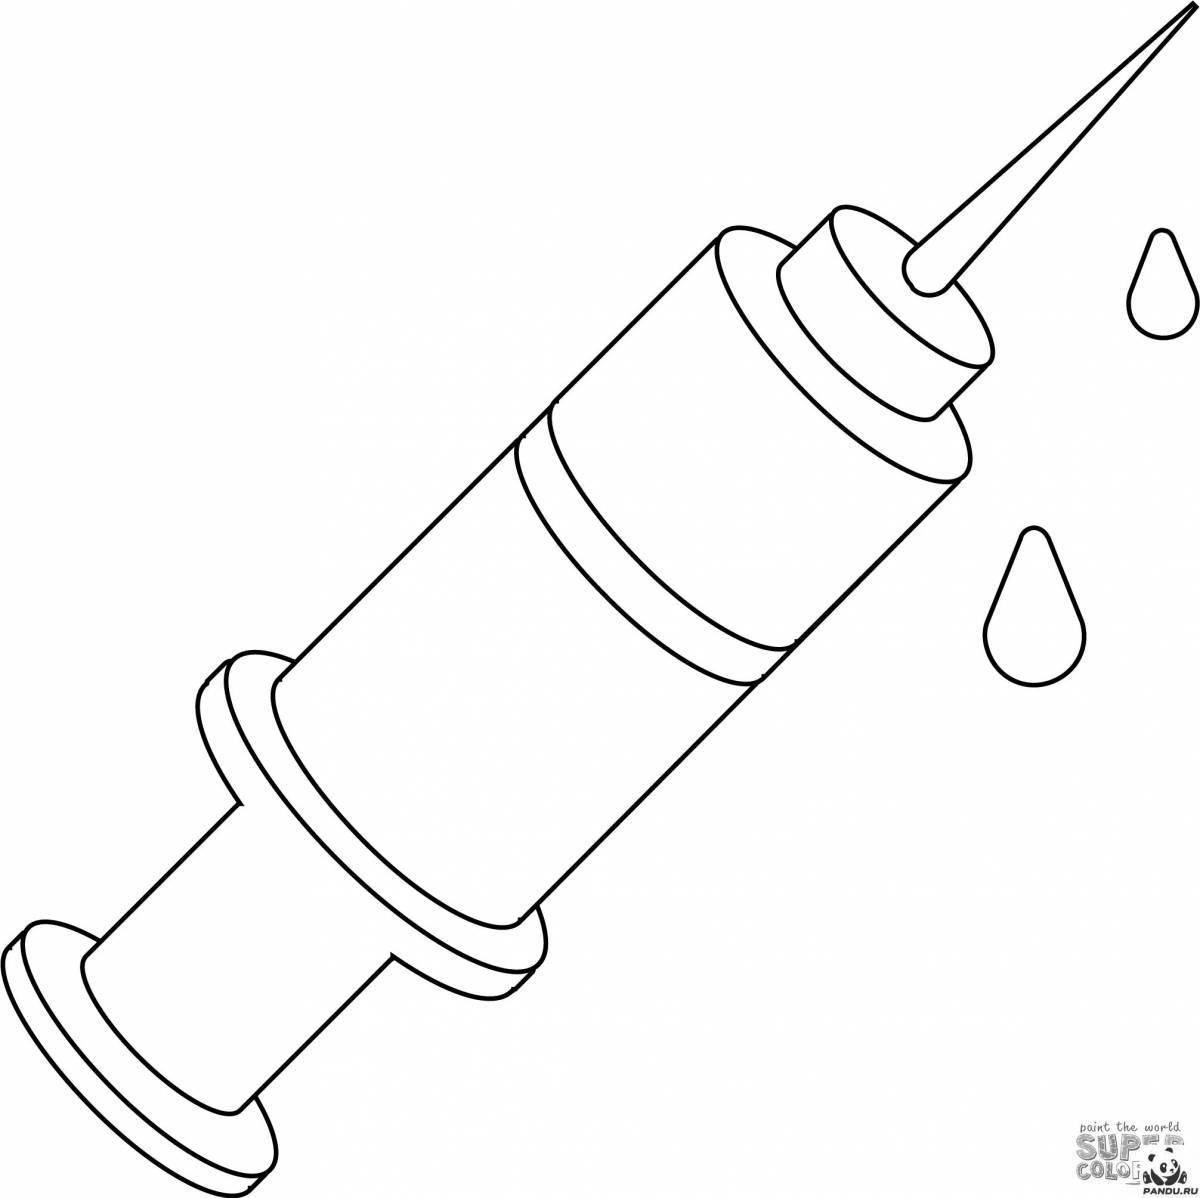 Great preschool syringe coloring page